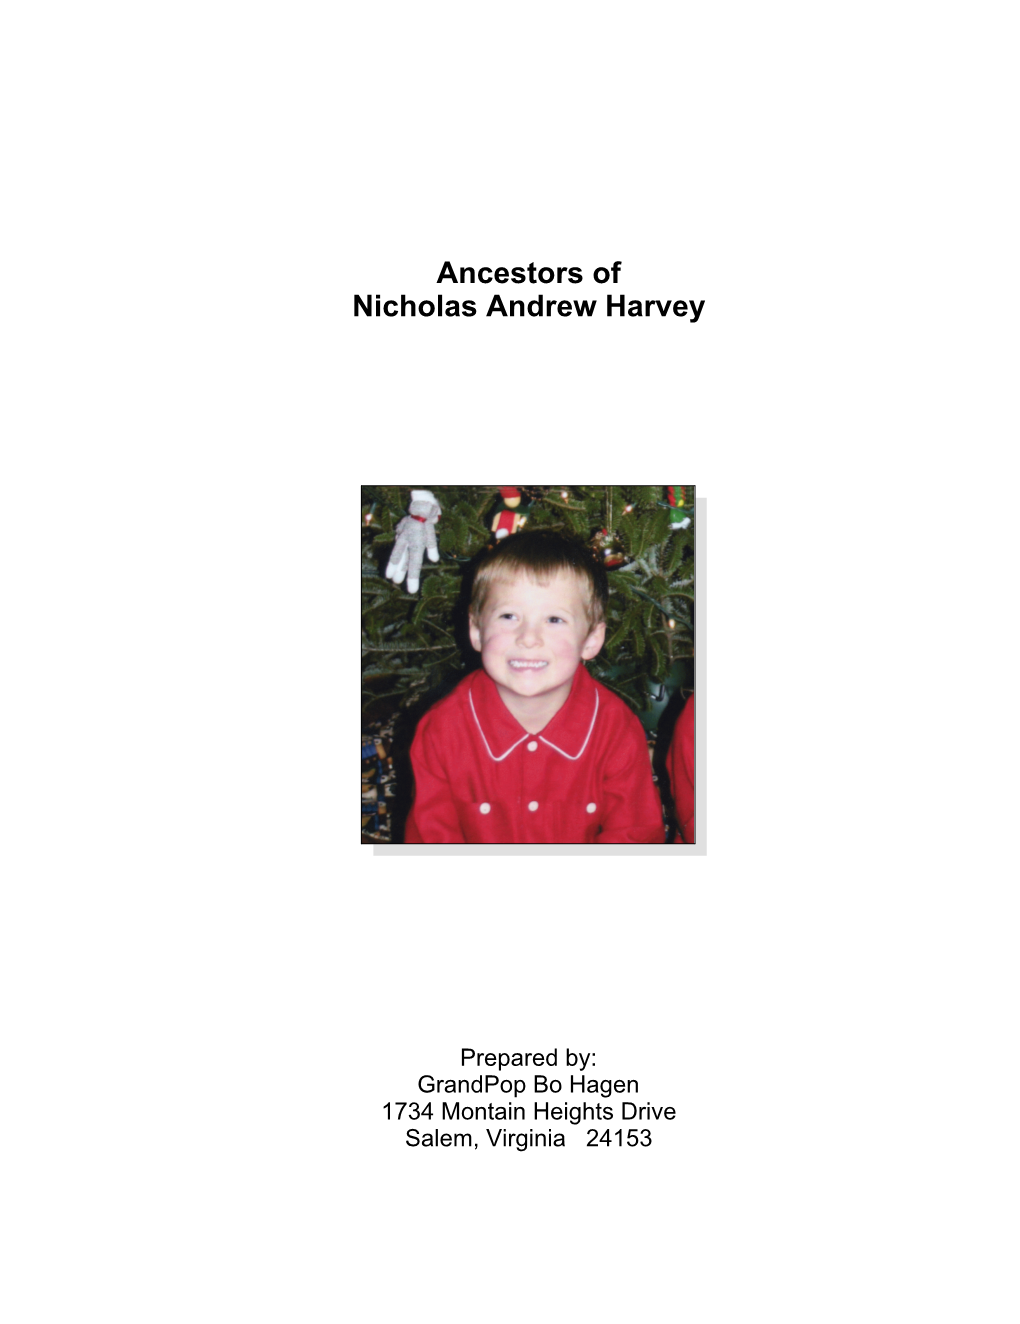 Ancestors of Nicholas Andrew Harvey